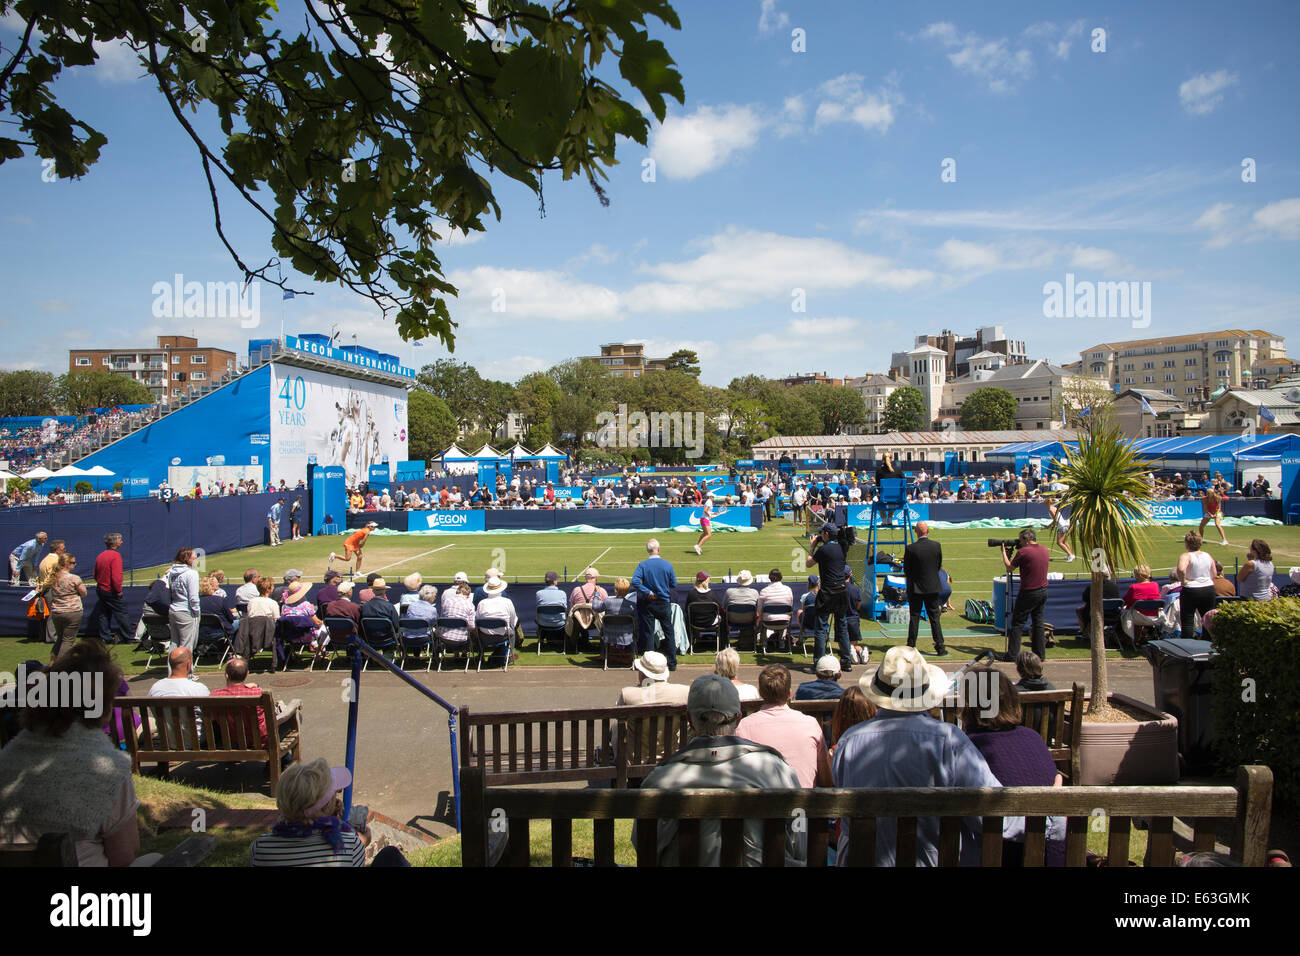 Aegon International Tennis Championships, le Devonshire Park, à Eastbourne, East Sussex, England, UK Banque D'Images